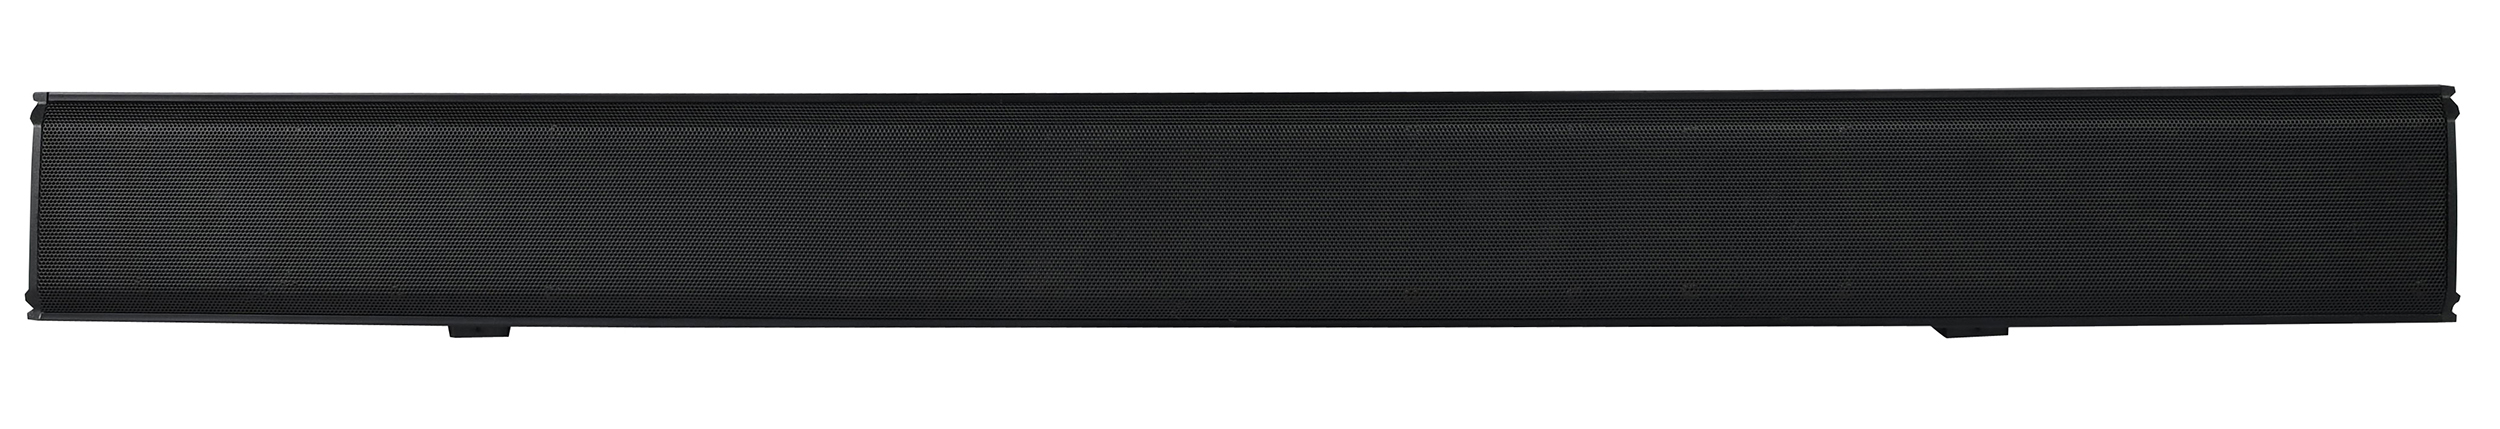 SBO680, 2.1 soundbar, 80cm 80w + Built-in Subwoofer, zwart